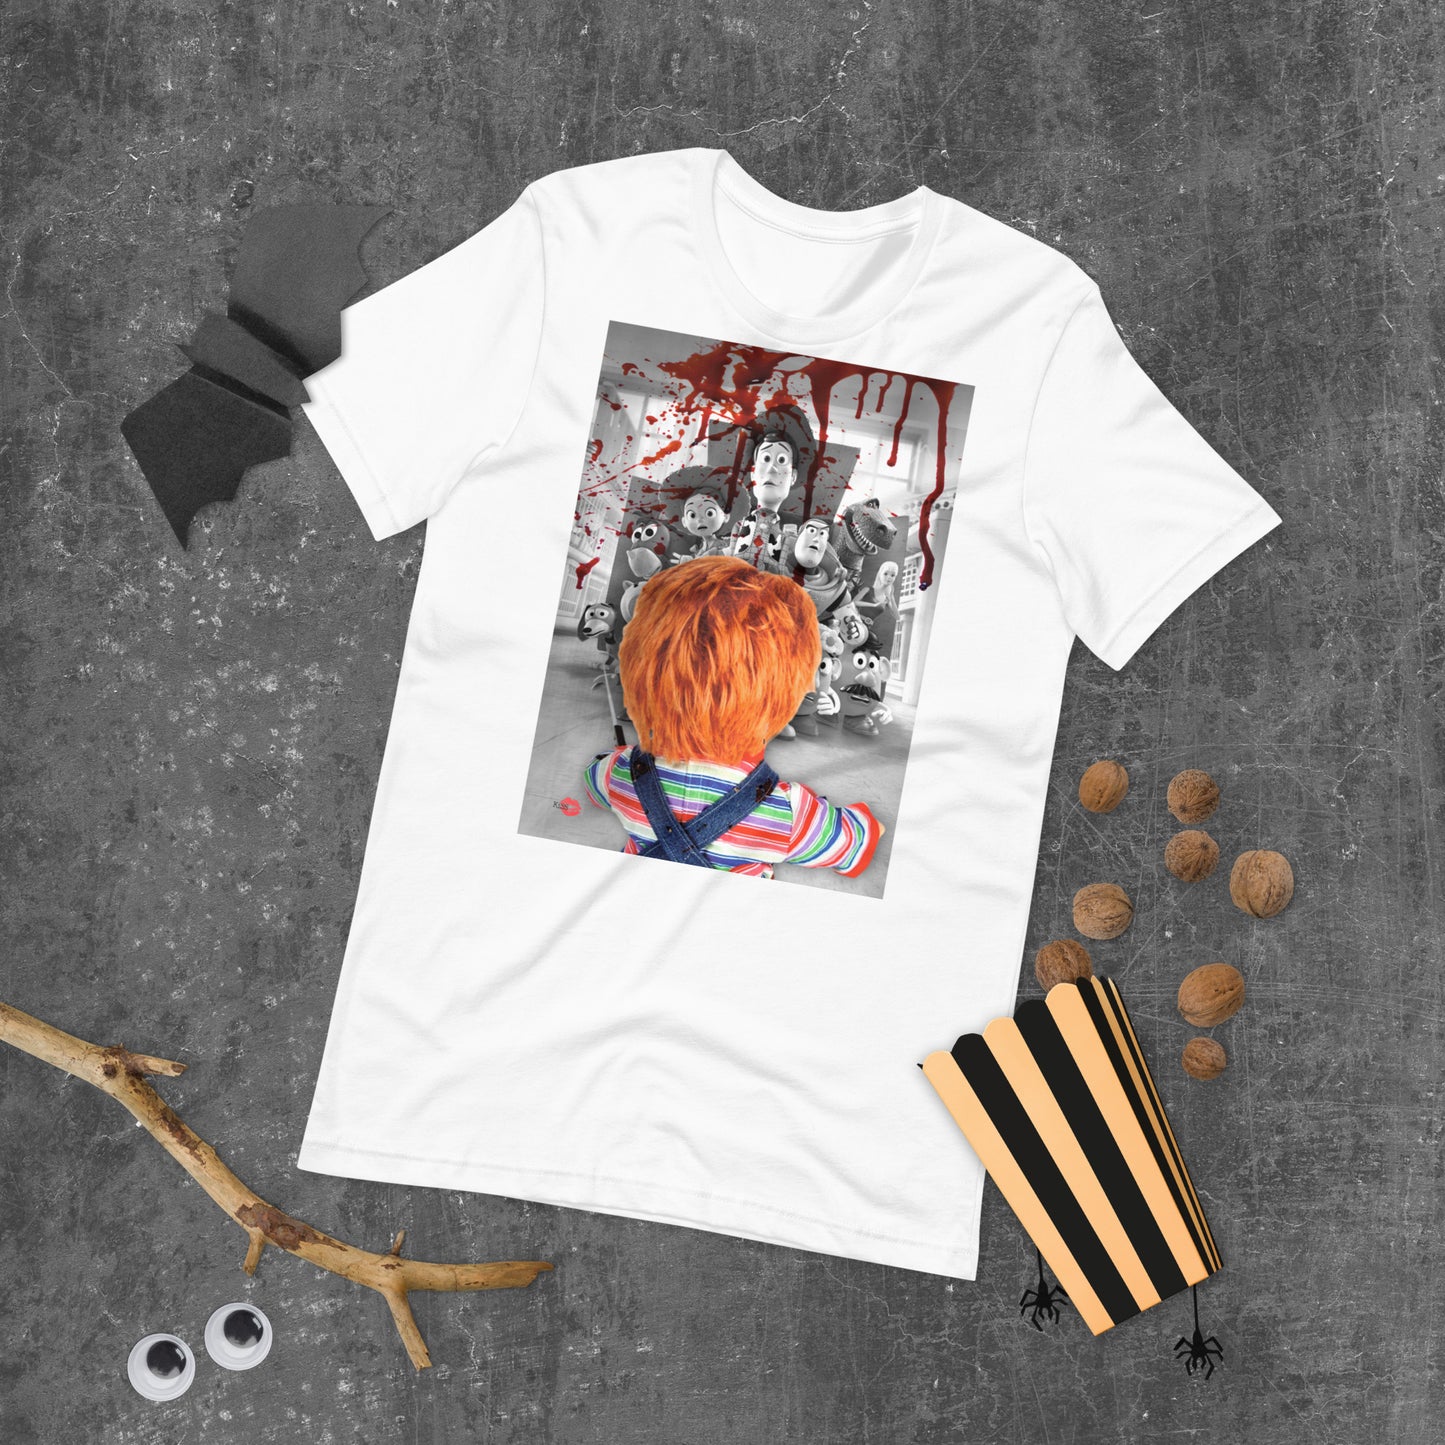 Toys Vs Chucky KiSS Unisex t-shirt - Toy Story Inspired Horror Halloween Edit